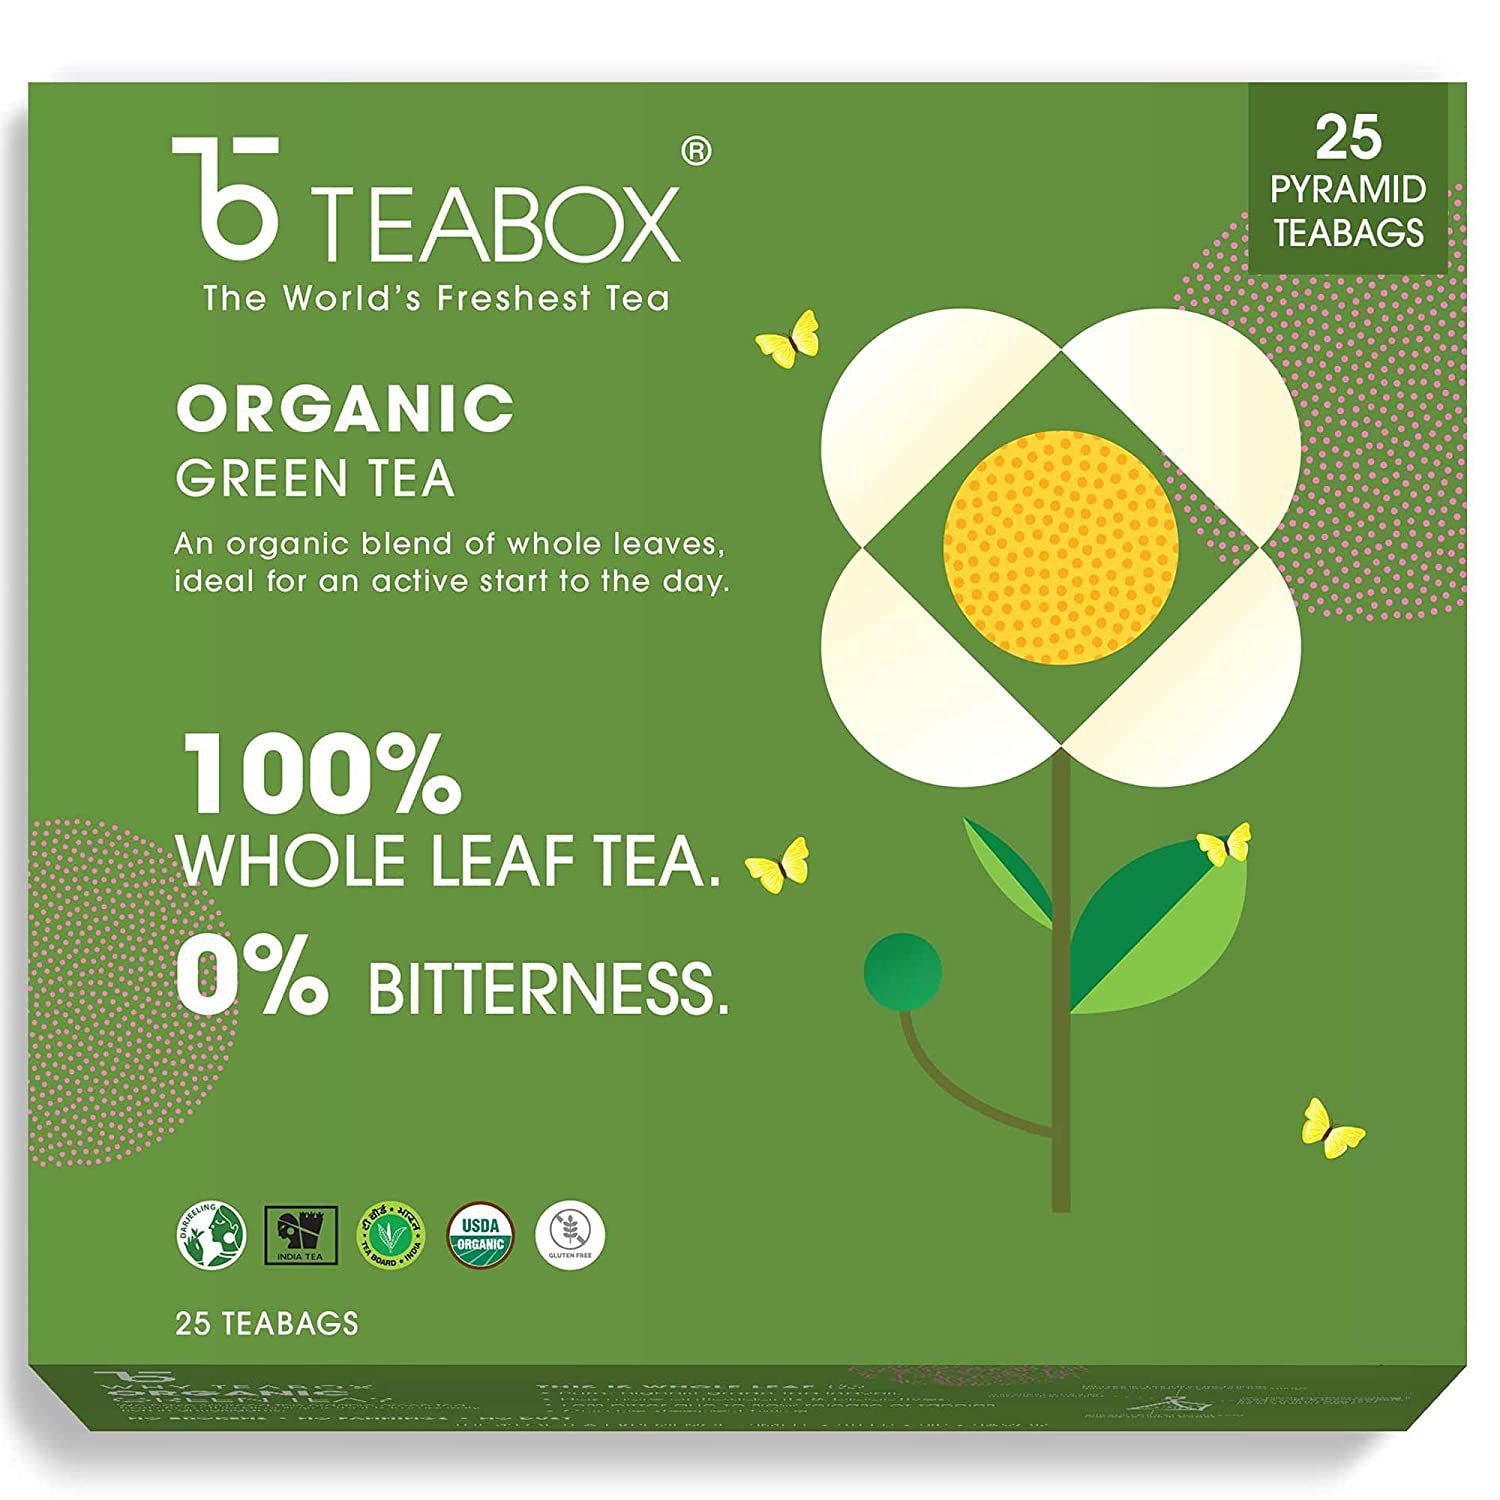 Teabox Organic Green Tea Image